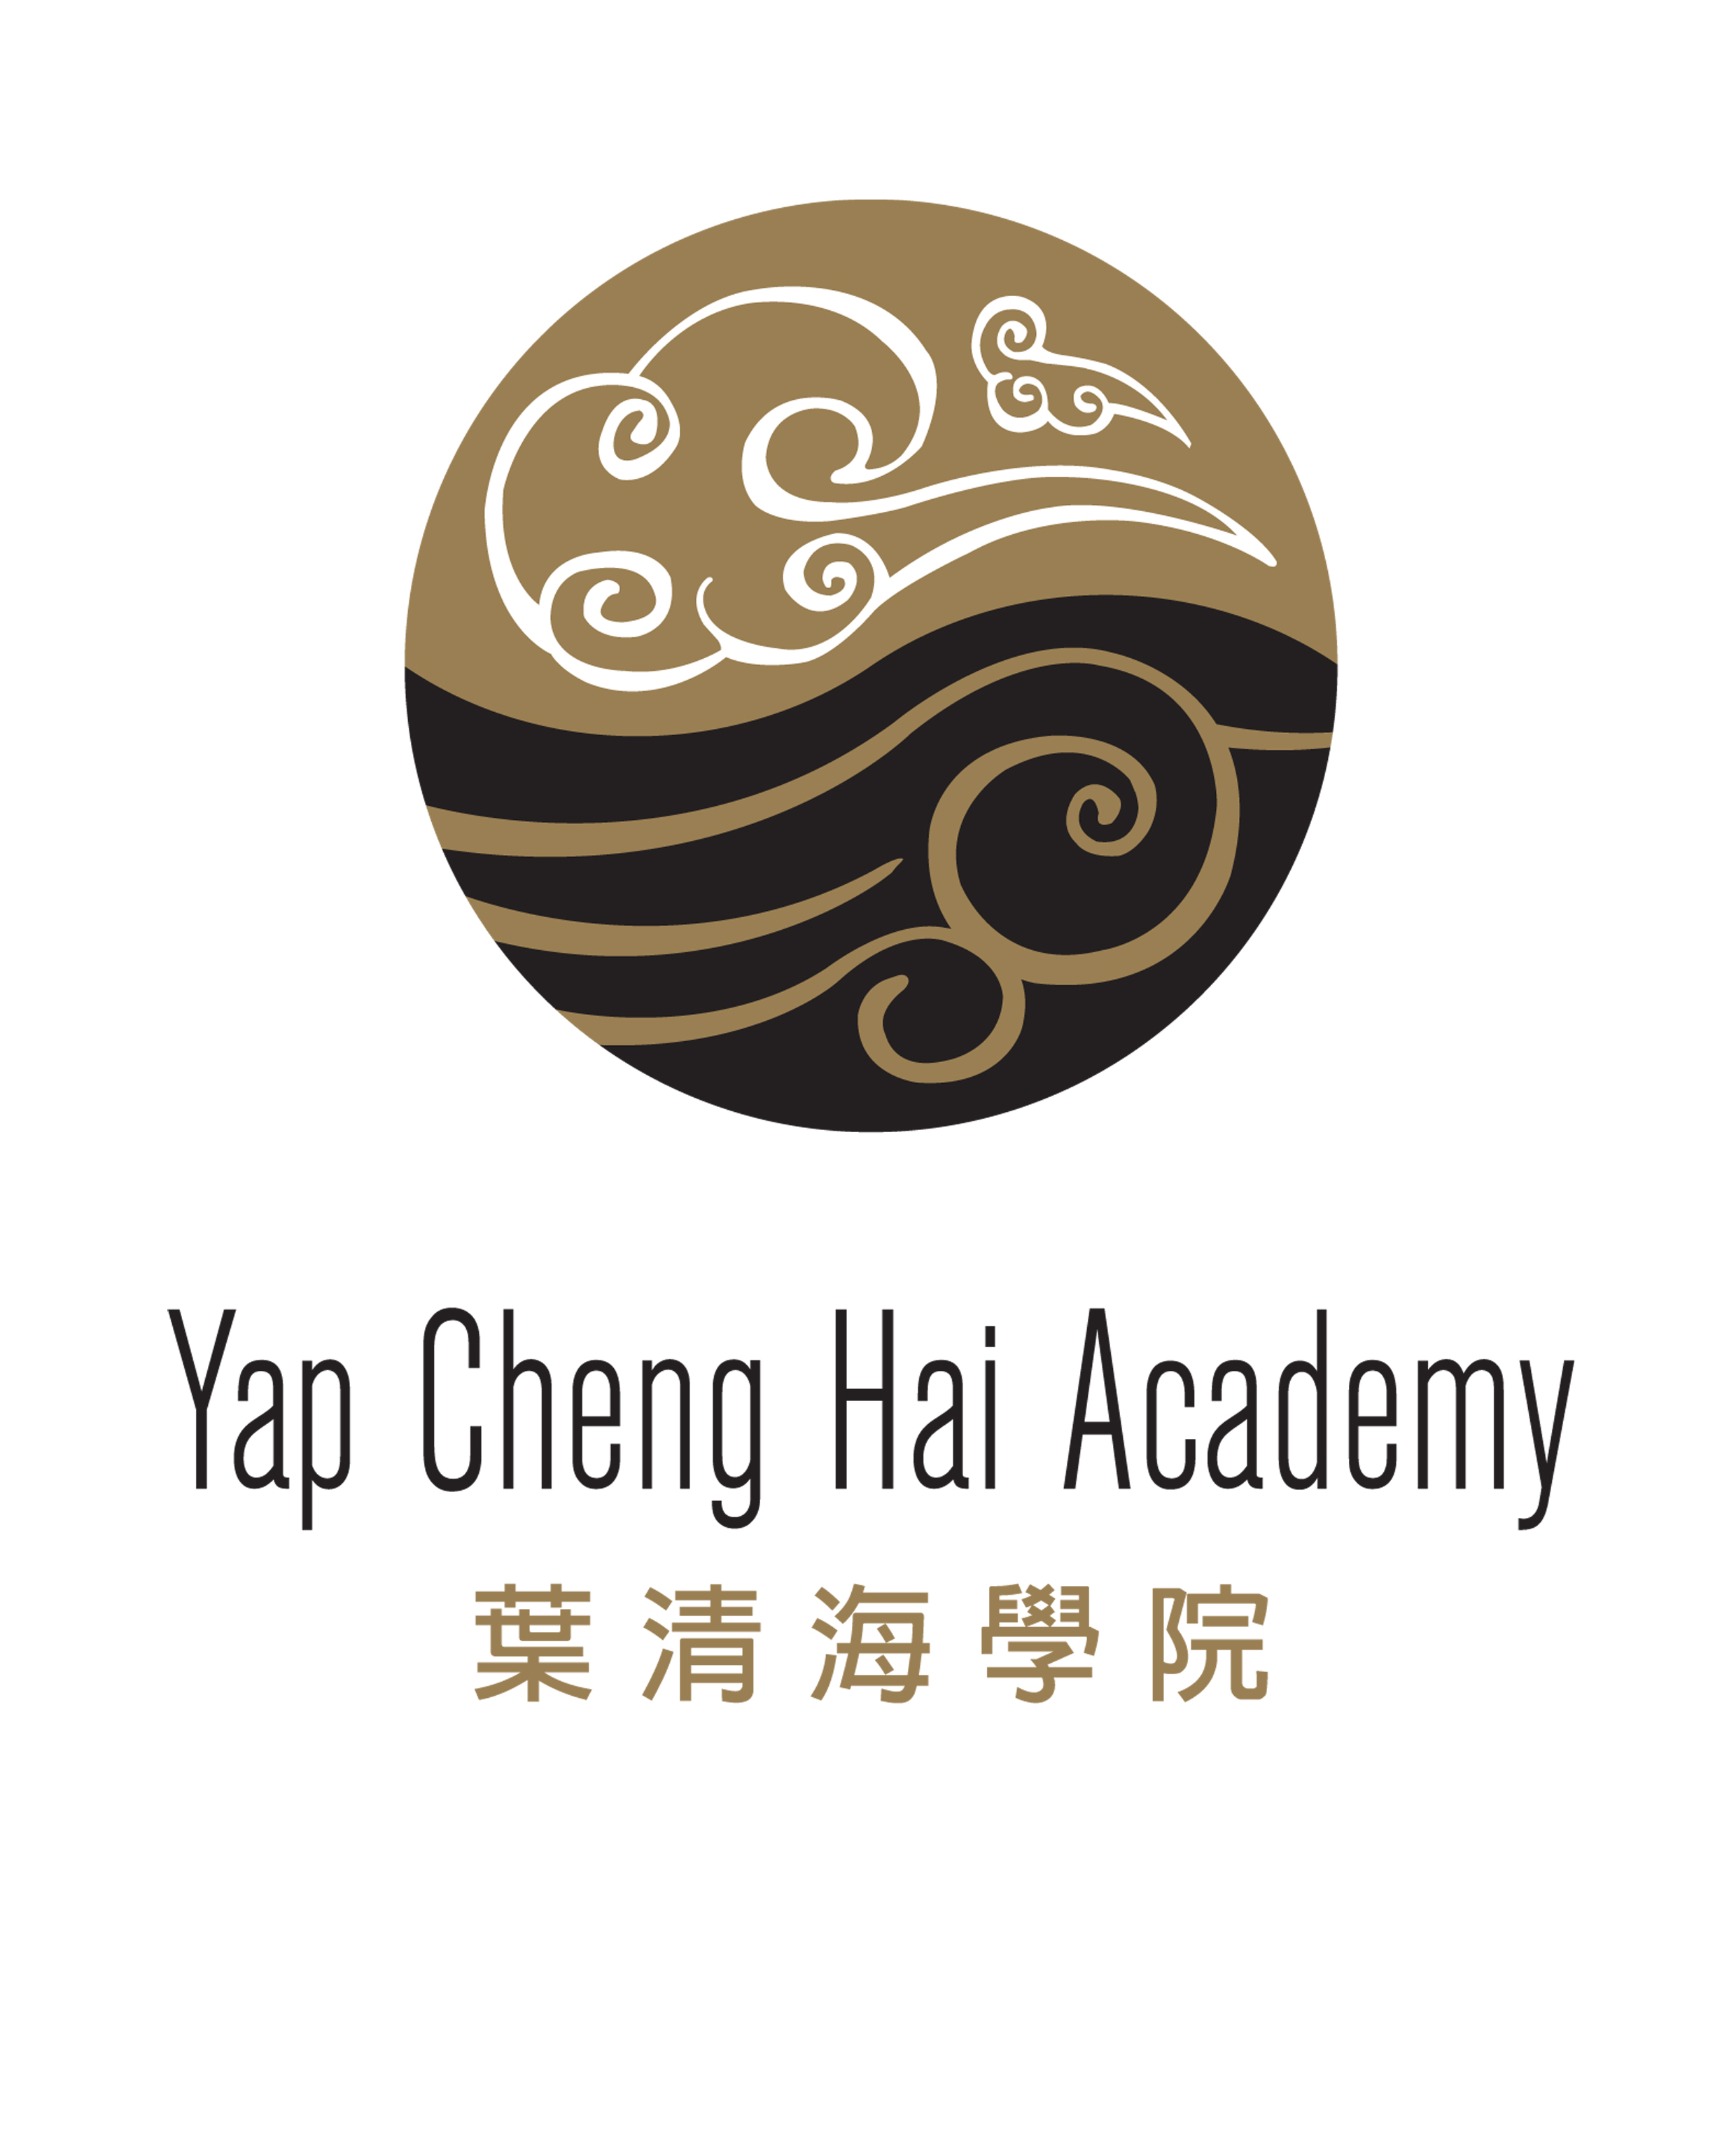 Yap Cheng Hai Academy Sdn Bhd